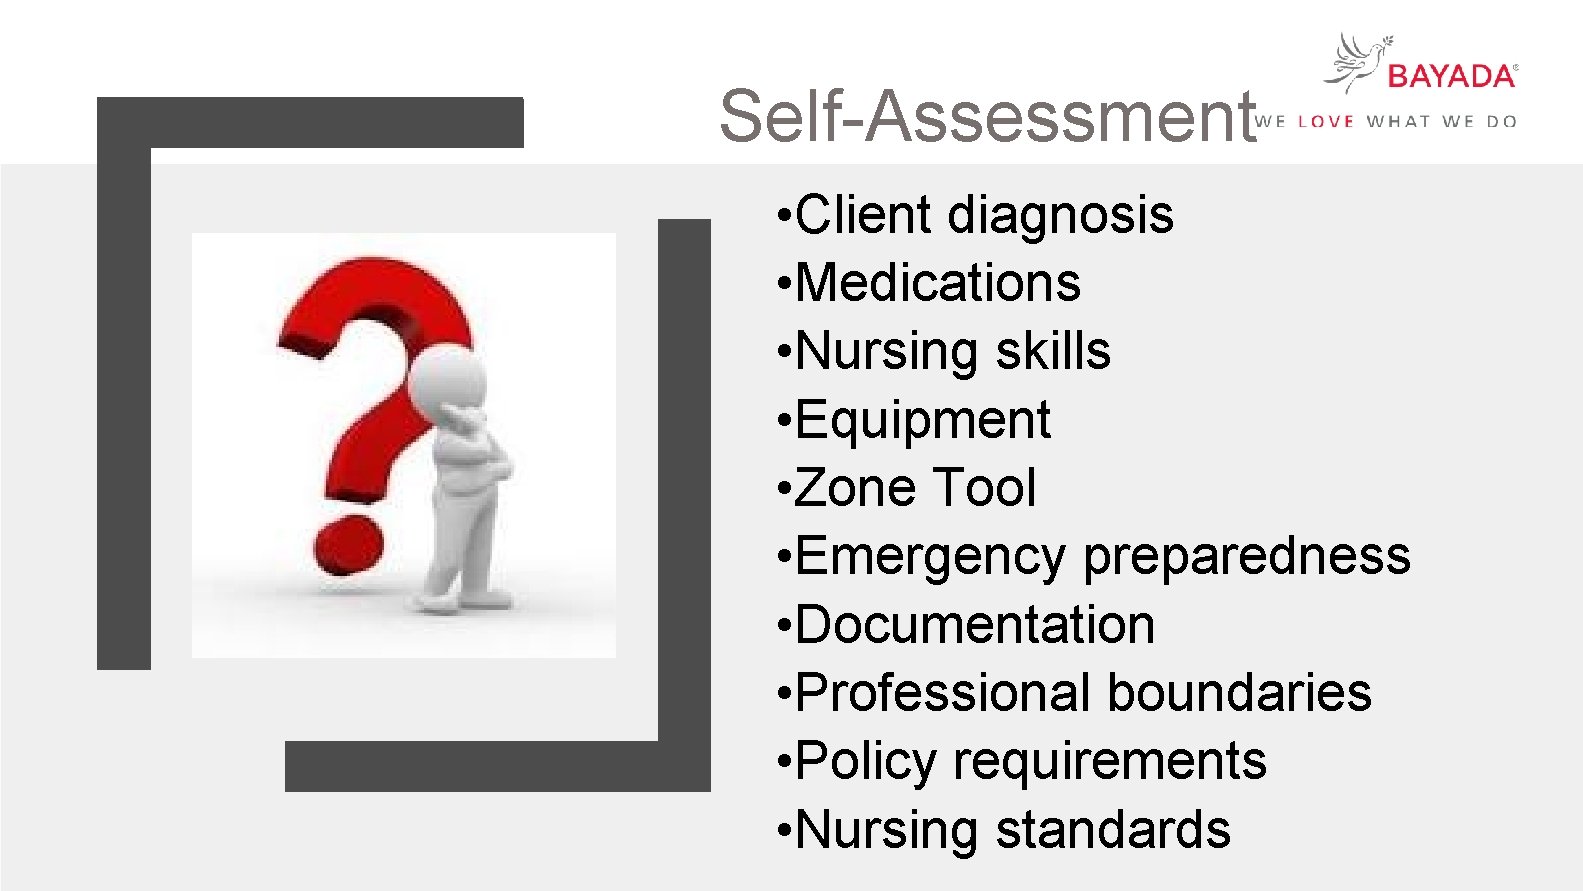 Self-Assessment • Client diagnosis • Medications • Nursing skills • Equipment • Zone Tool